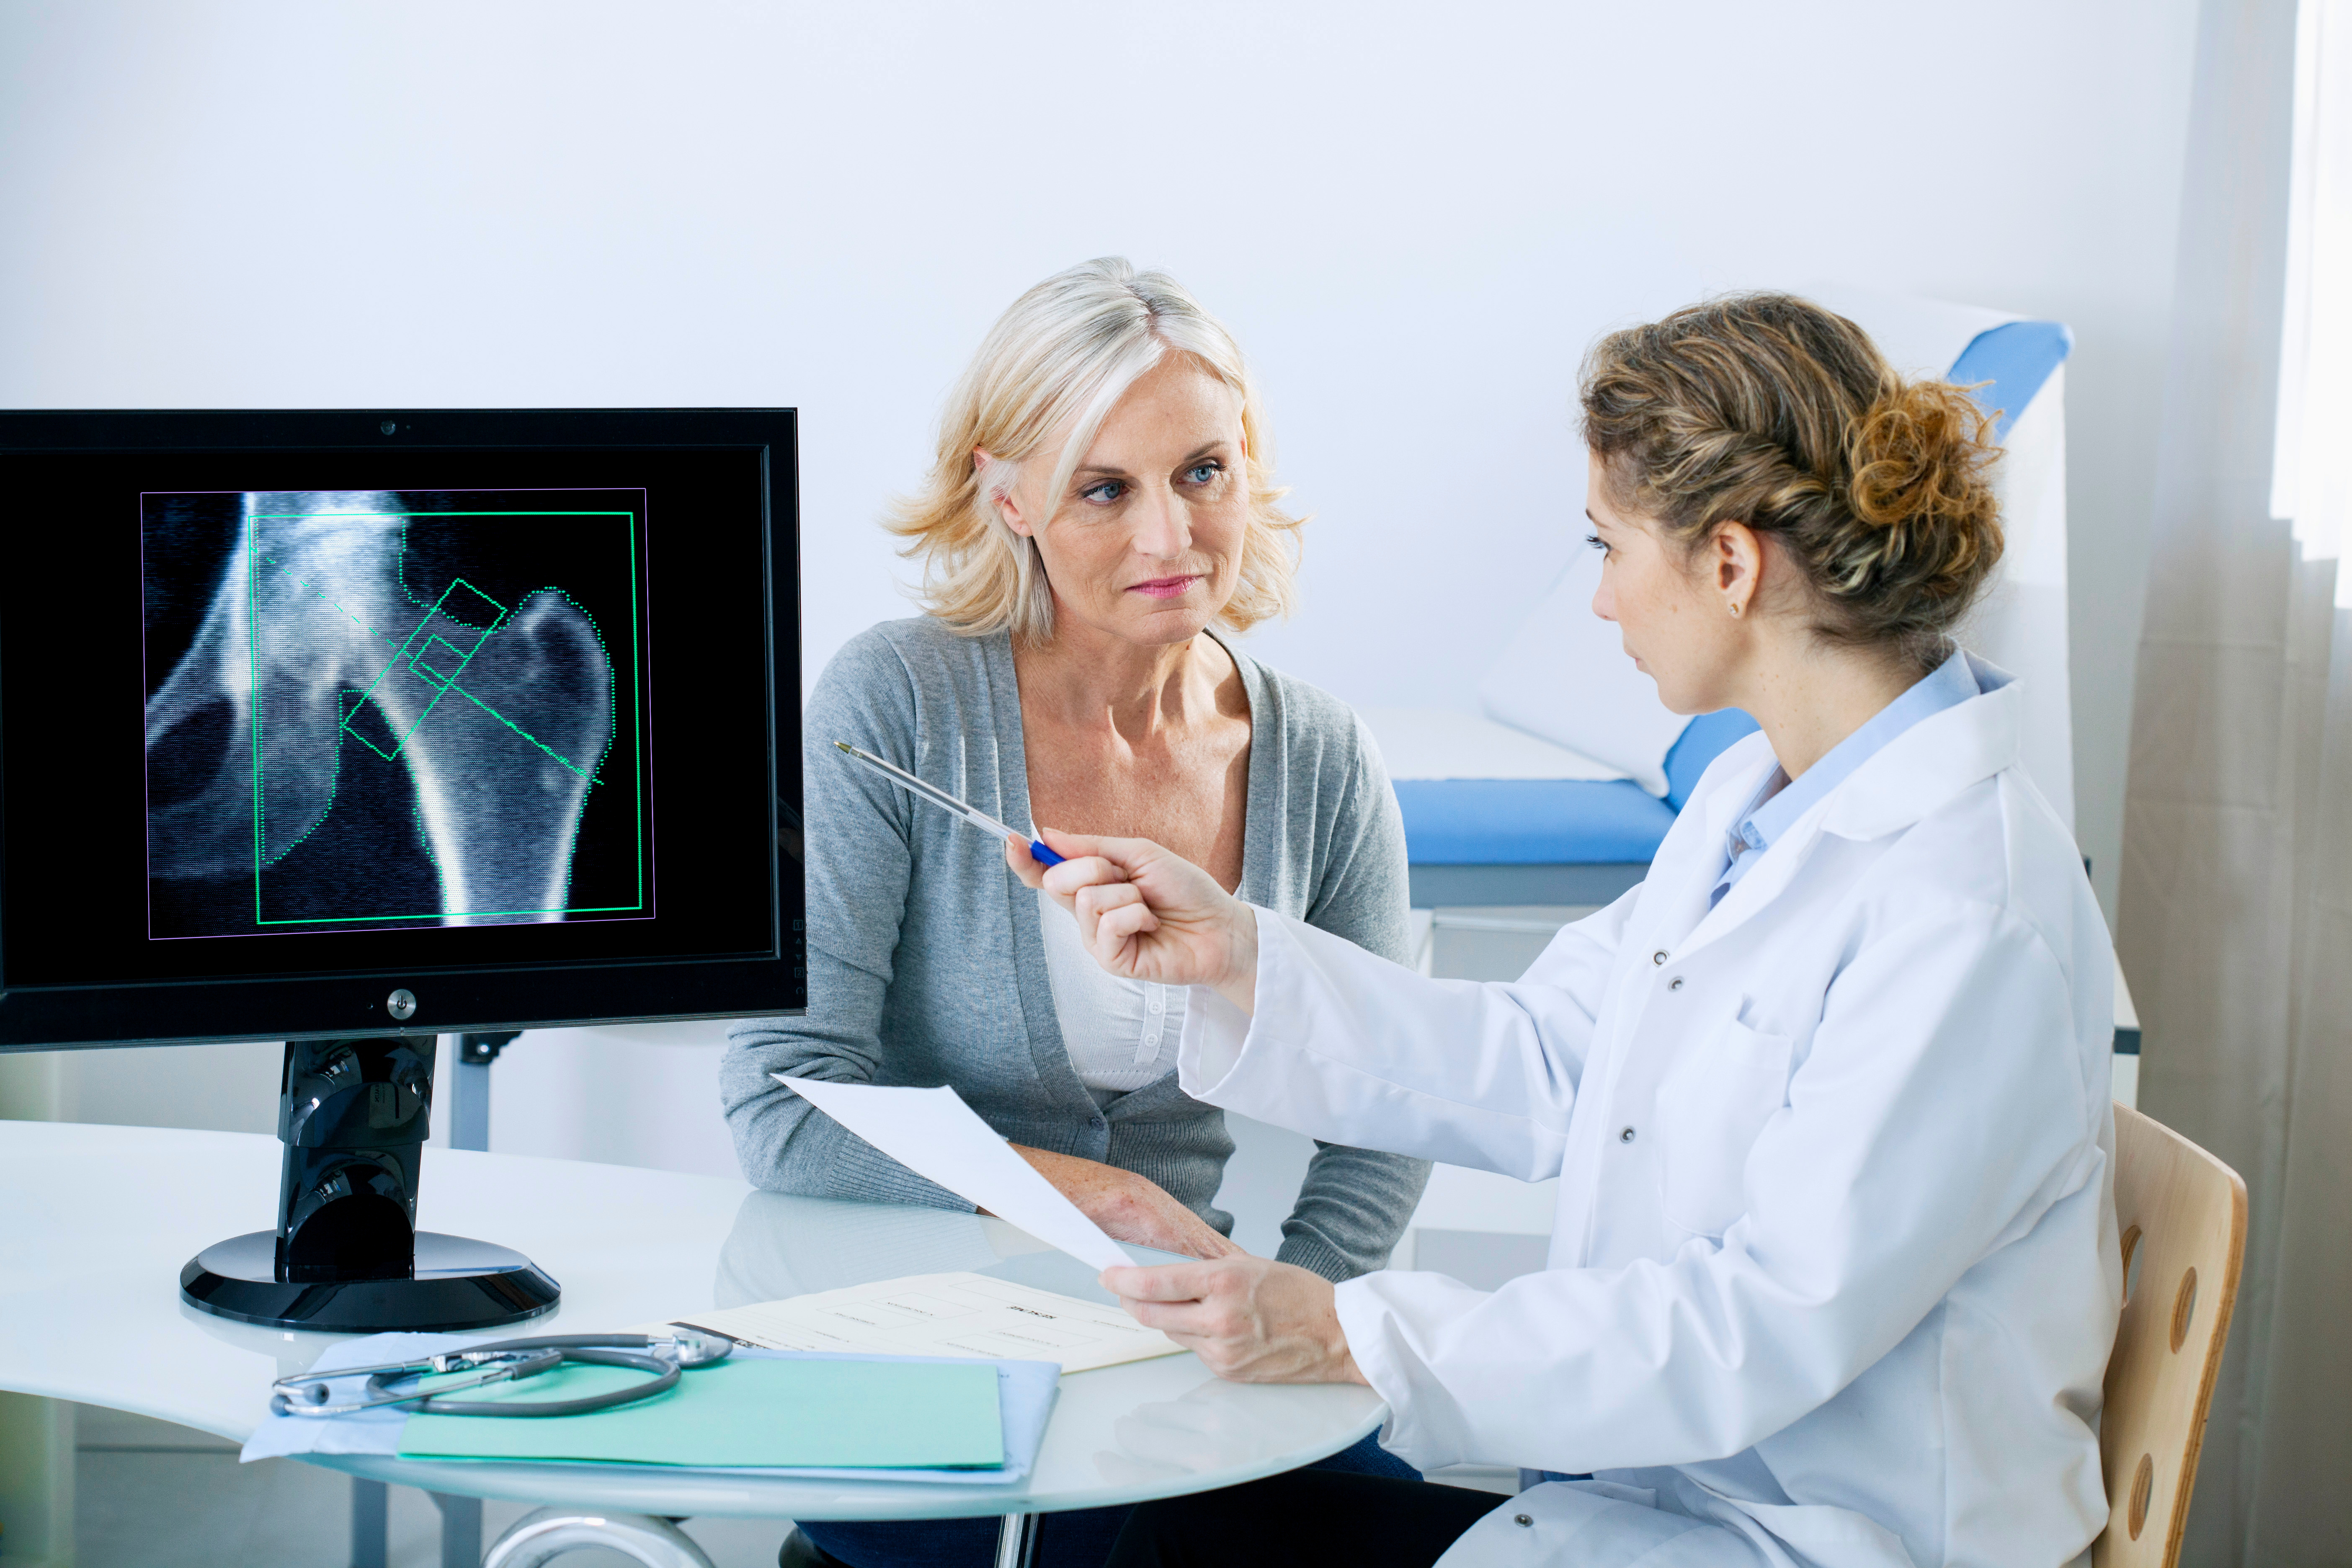 L'ostéodensitométrie est l'examen qui permet de vérifier la perte osseuse. ©&nbsp;&nbsp;RFBSIP, Adobe Stock